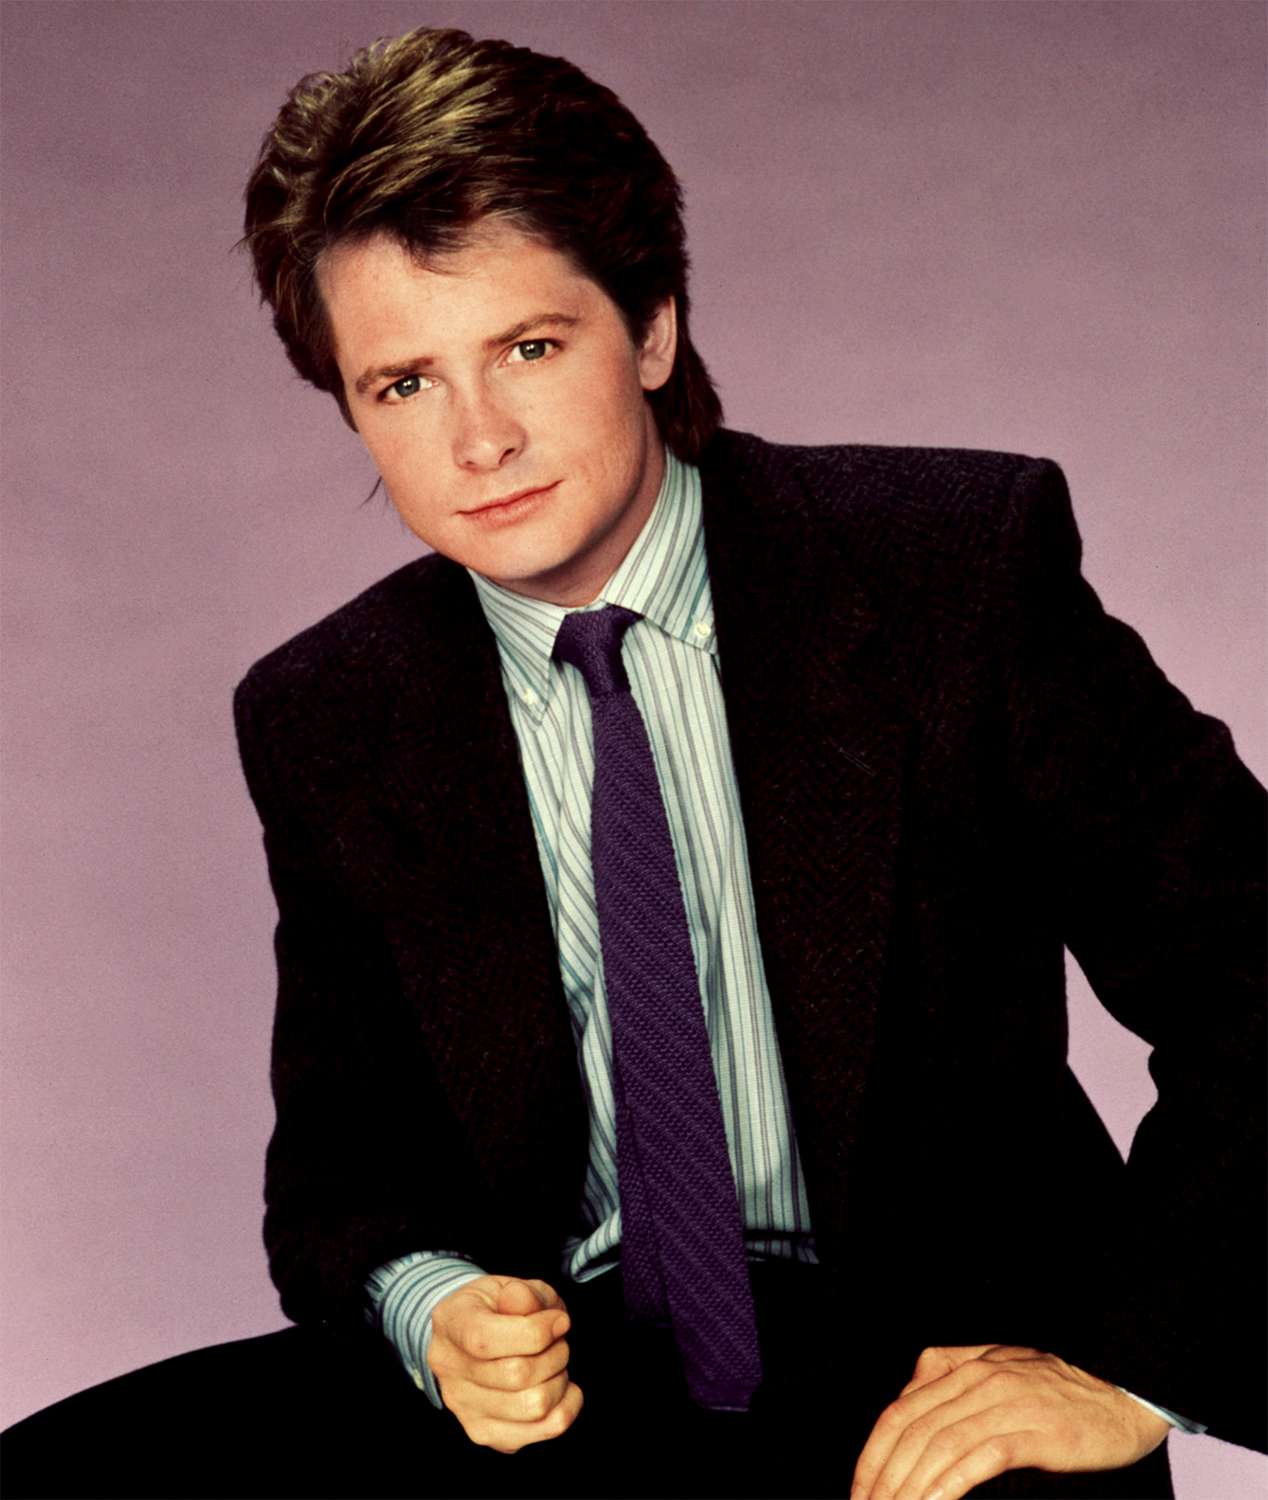 Michael J. Fox alive and kicking